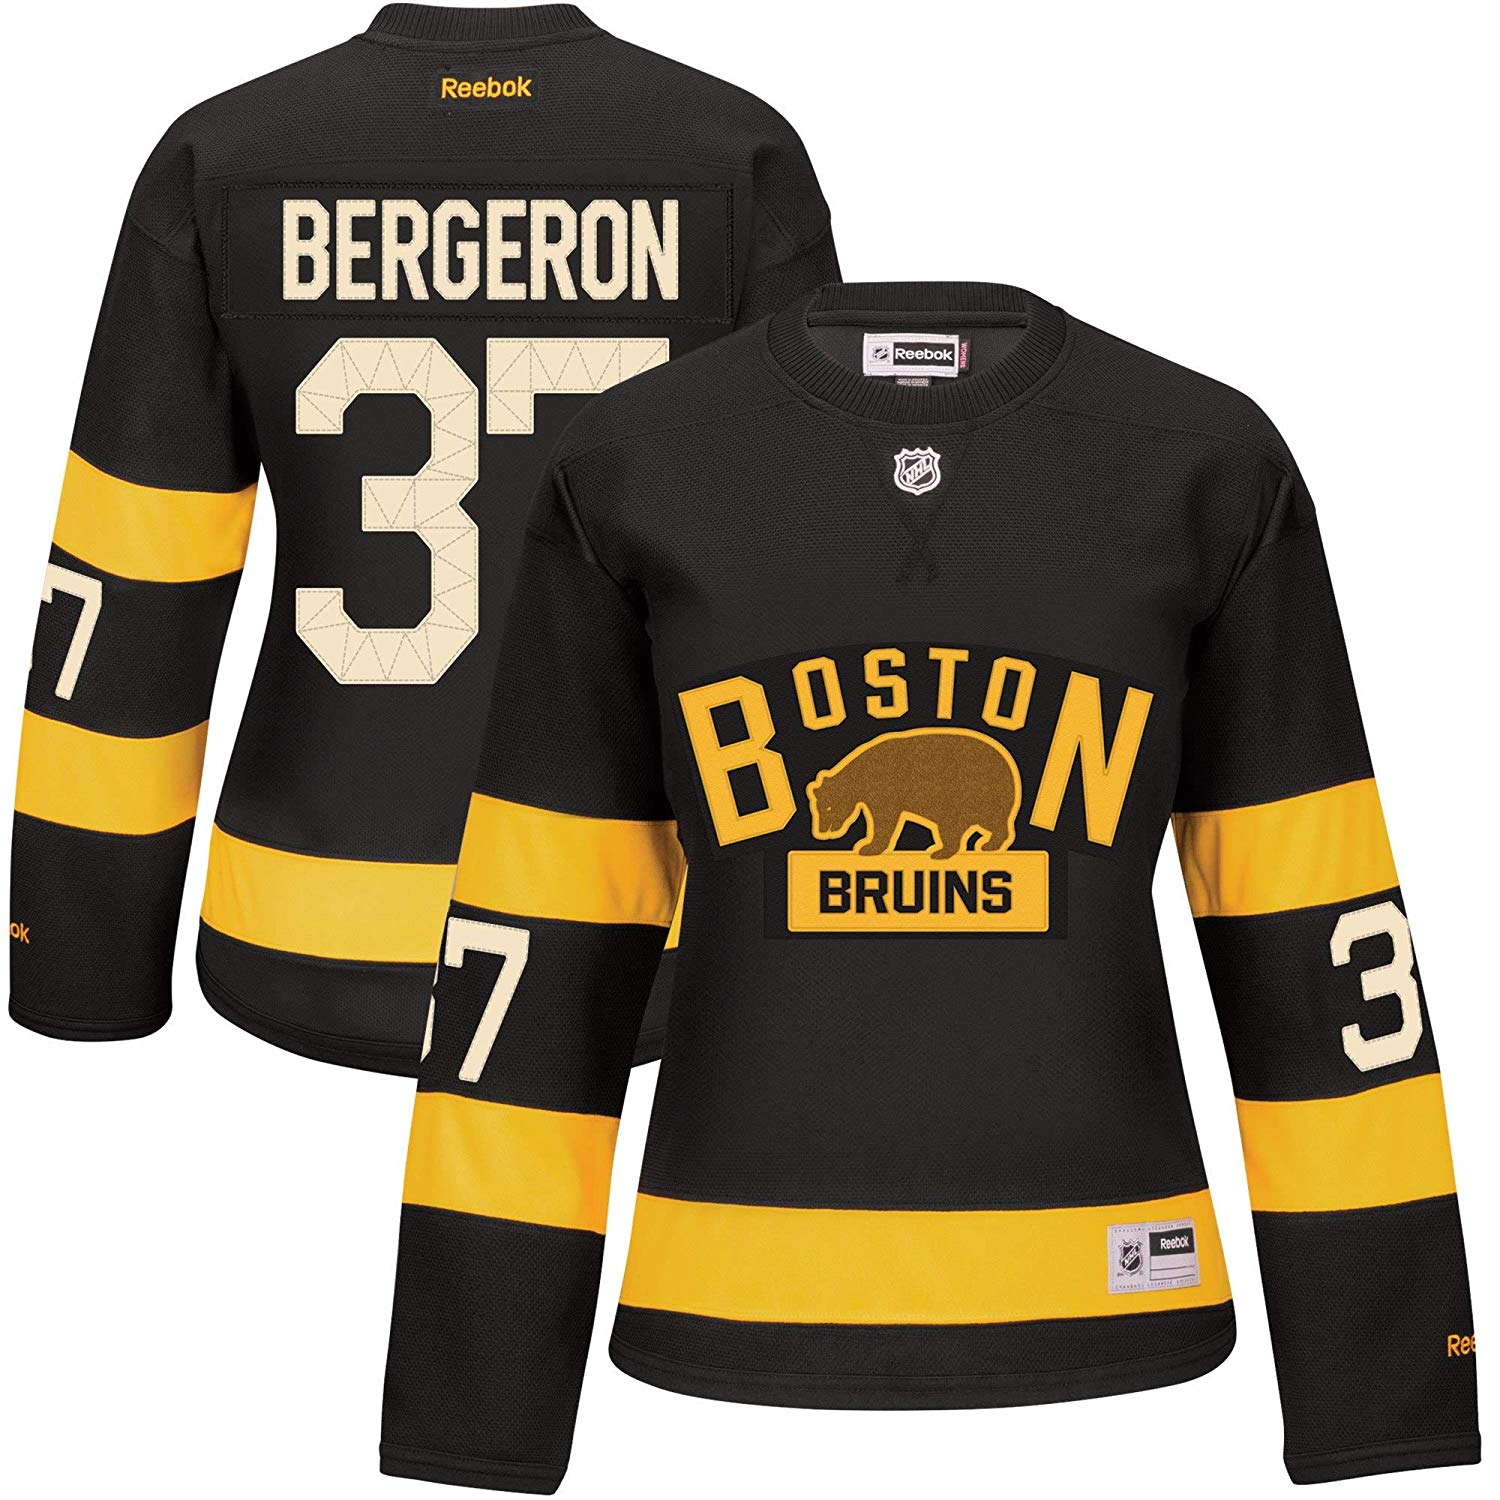 Reebok NHL Women's Boston Bruins Patrice Bergeron #37 Alternate Premier Jersey   eBay